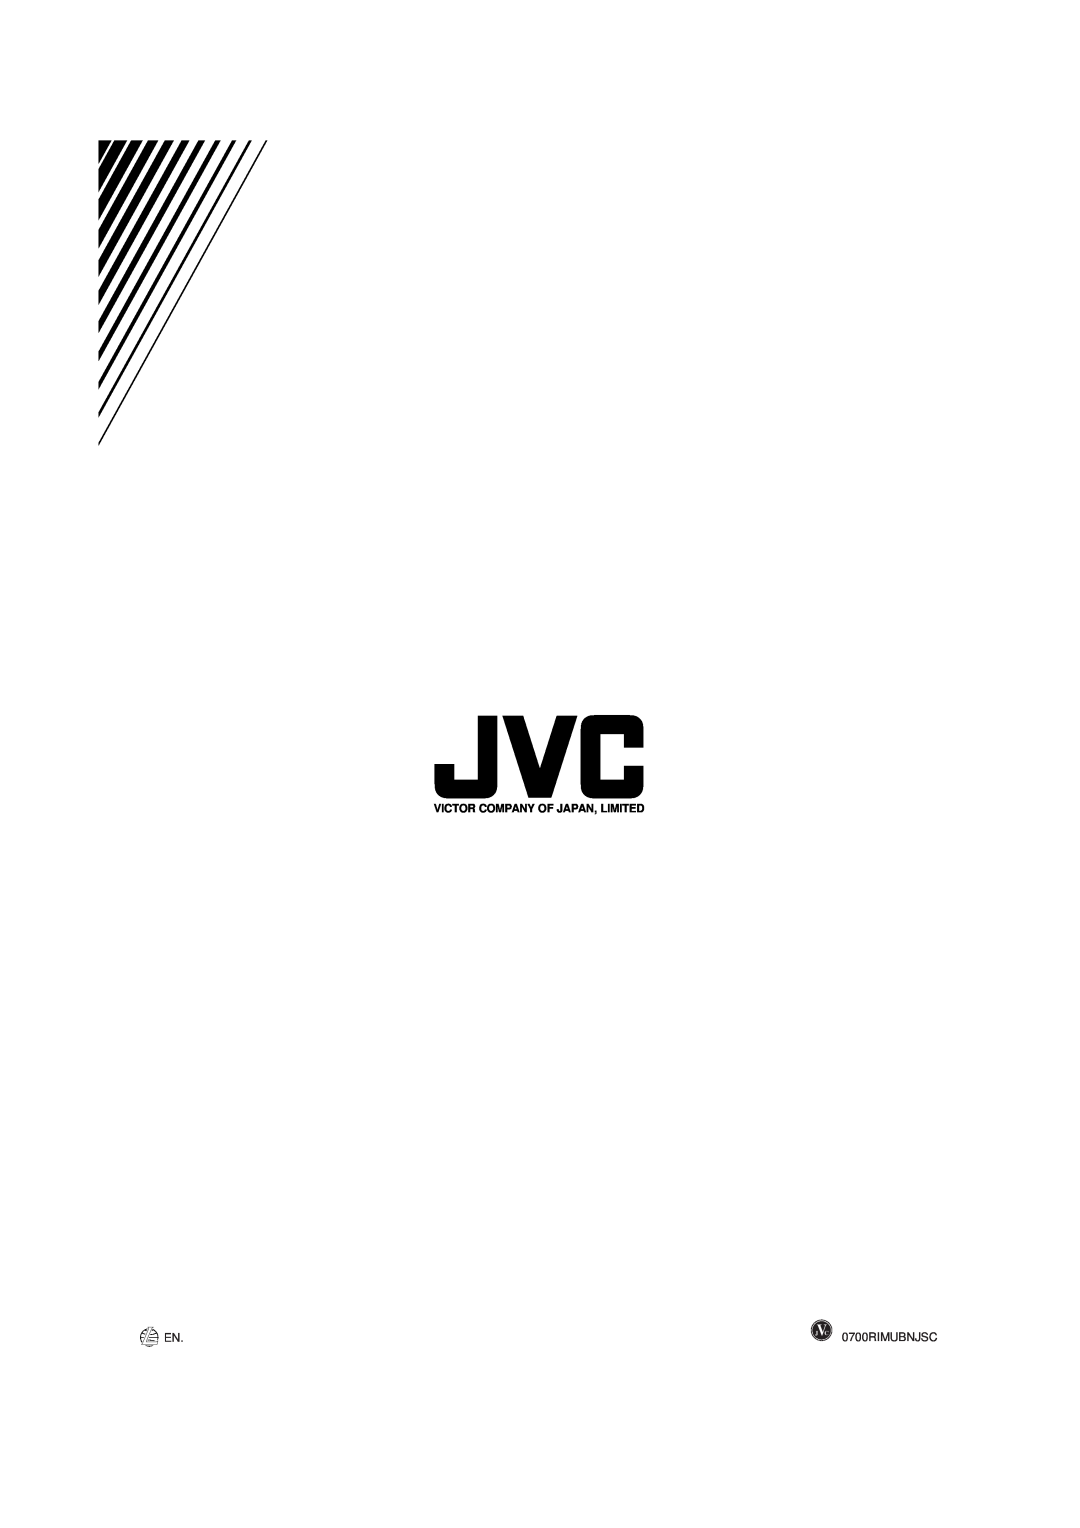 JVC XV-521BK manual 0700RIMUBNJSC, Victor Company Of Japan, Limited 